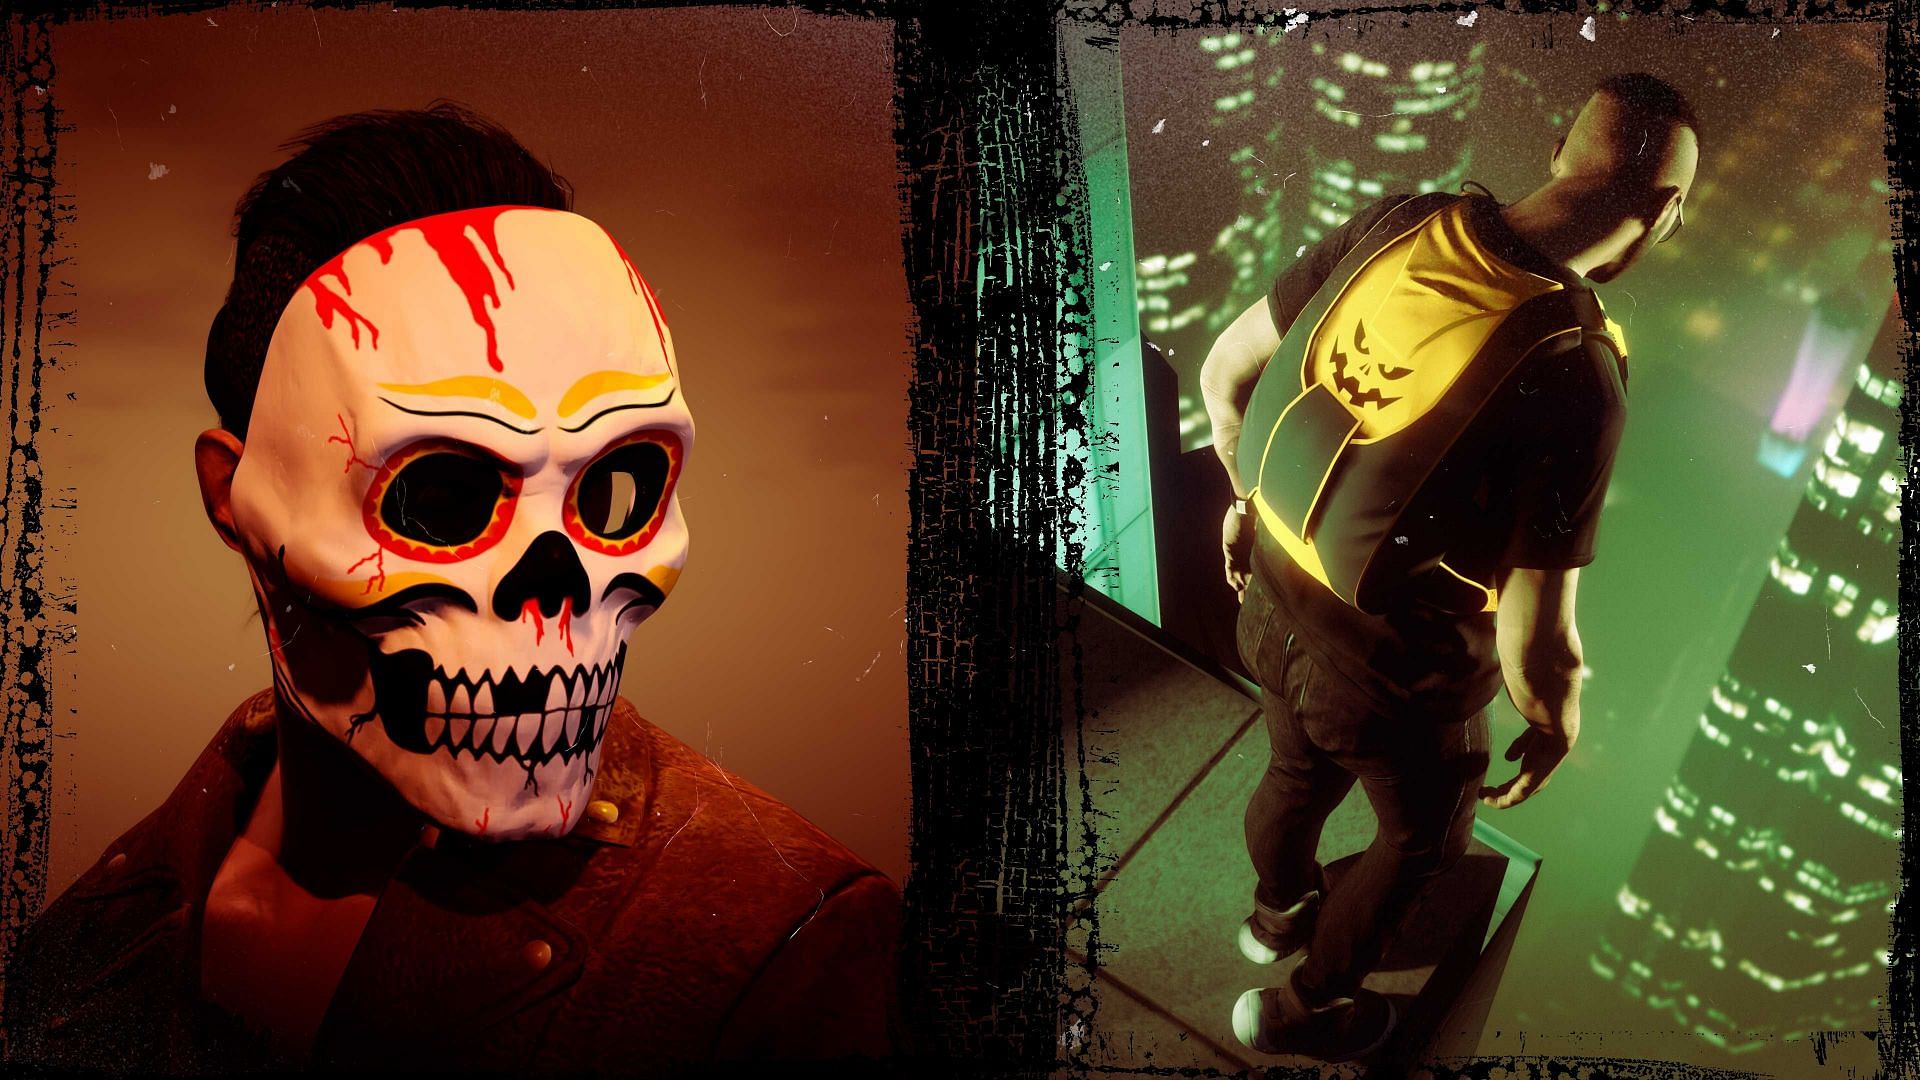 The White Vintage Skull Mask and Halloween Parachute Bag (Image via Rockstar Games)